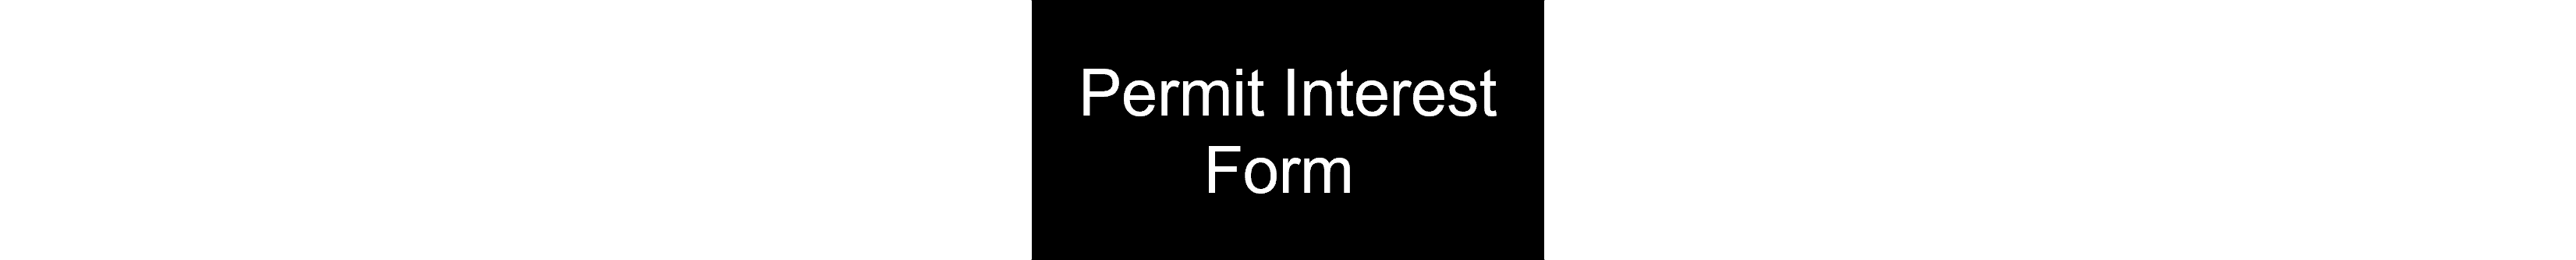 Form Button